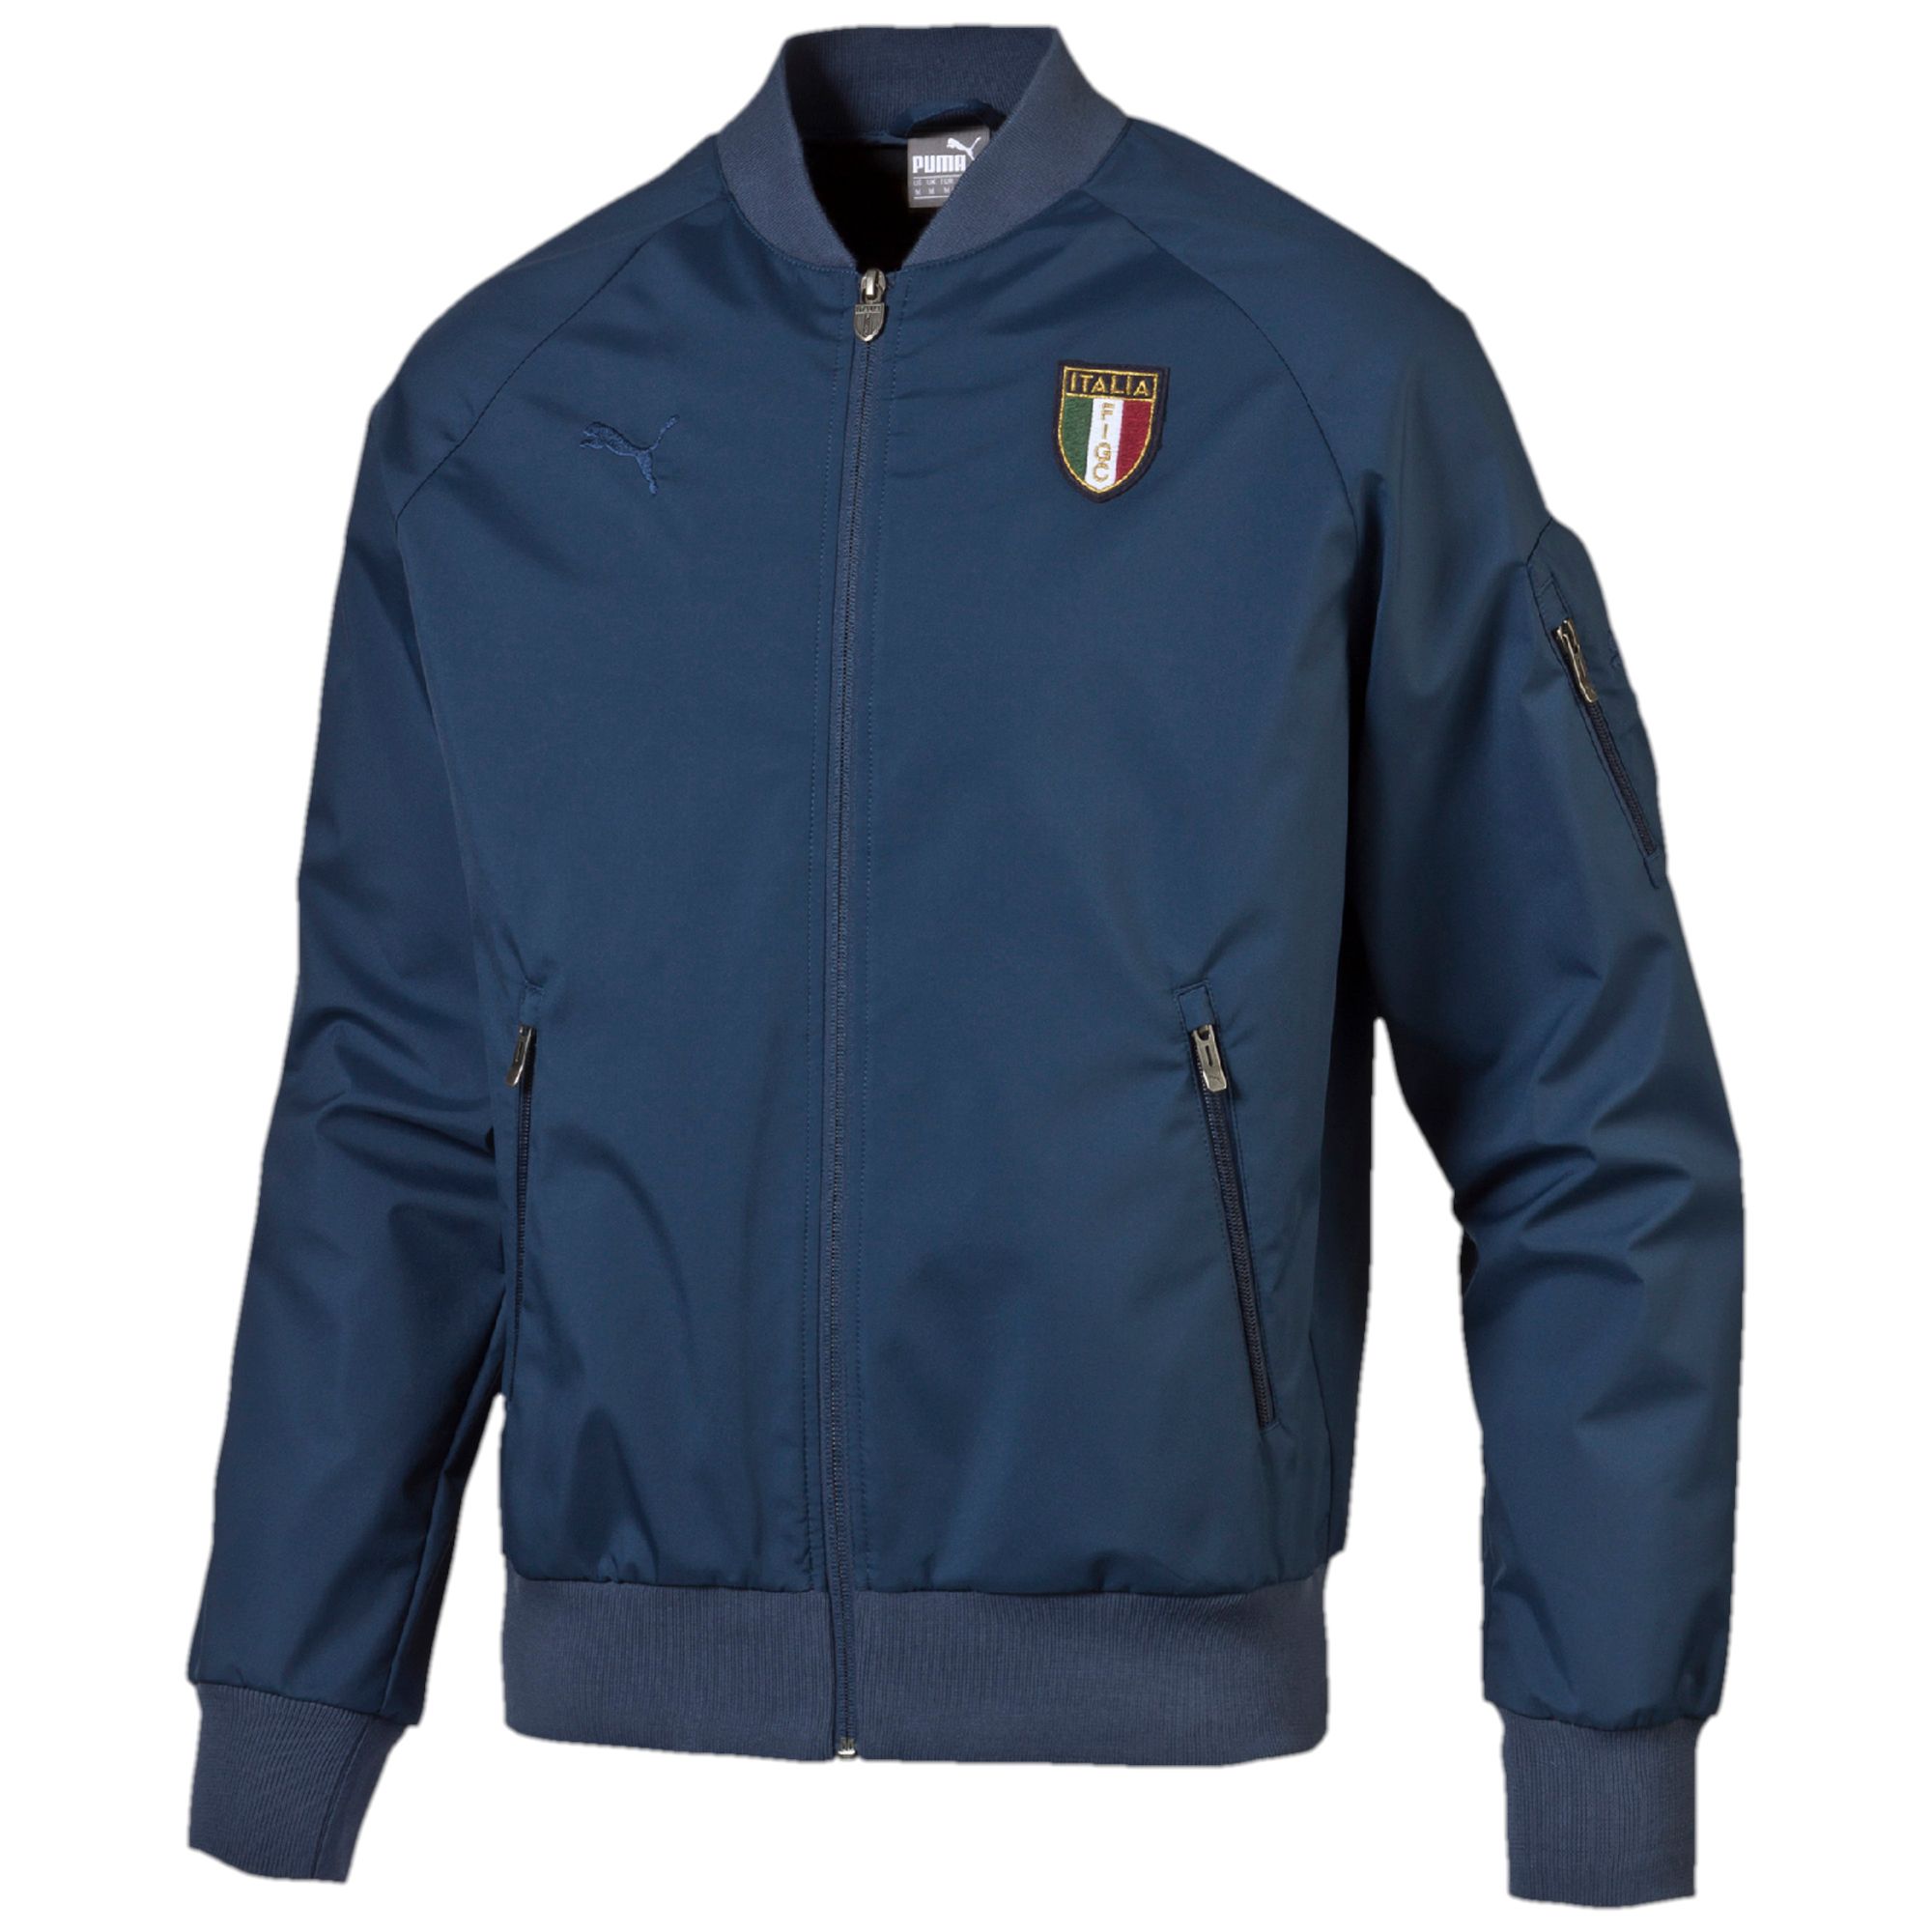  FIGC Italia Azzurri Woven Jacket - Puma<br> FIGC Italia Azzurri Woven Jacket  FIGC Italia Azzurri Woven Jacket  PUMA  -     .       ,       .          .           .: - 2015 : 100%       <br><br>color: <br>size US: M<br>gender: Male